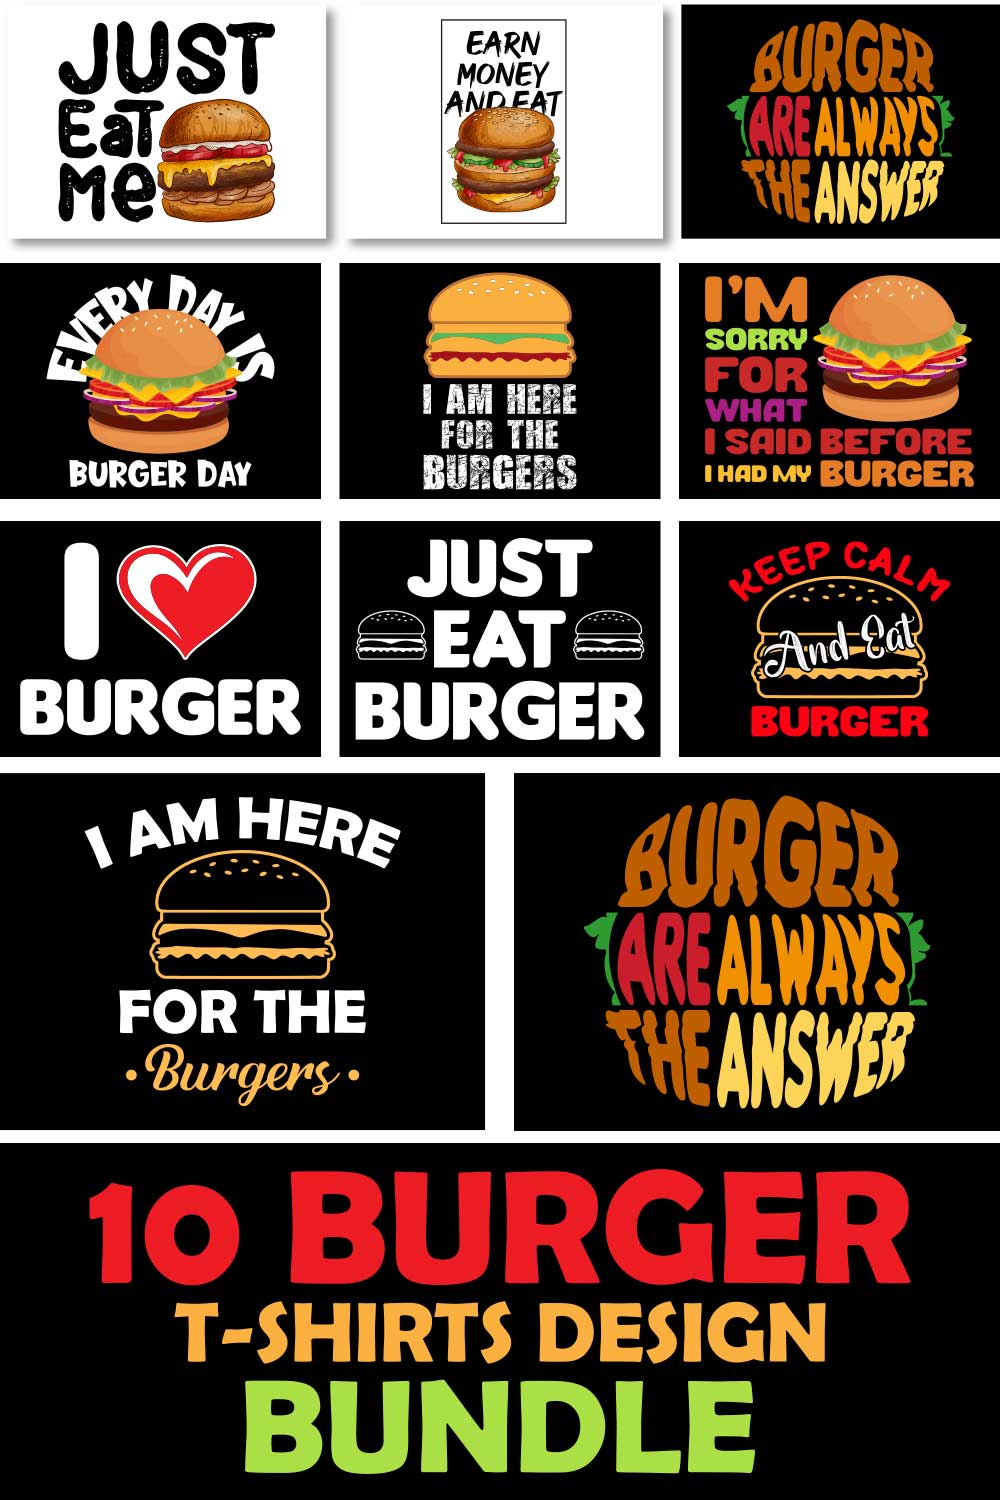 Best burger t-shirts design for burger lover pinterest preview image.